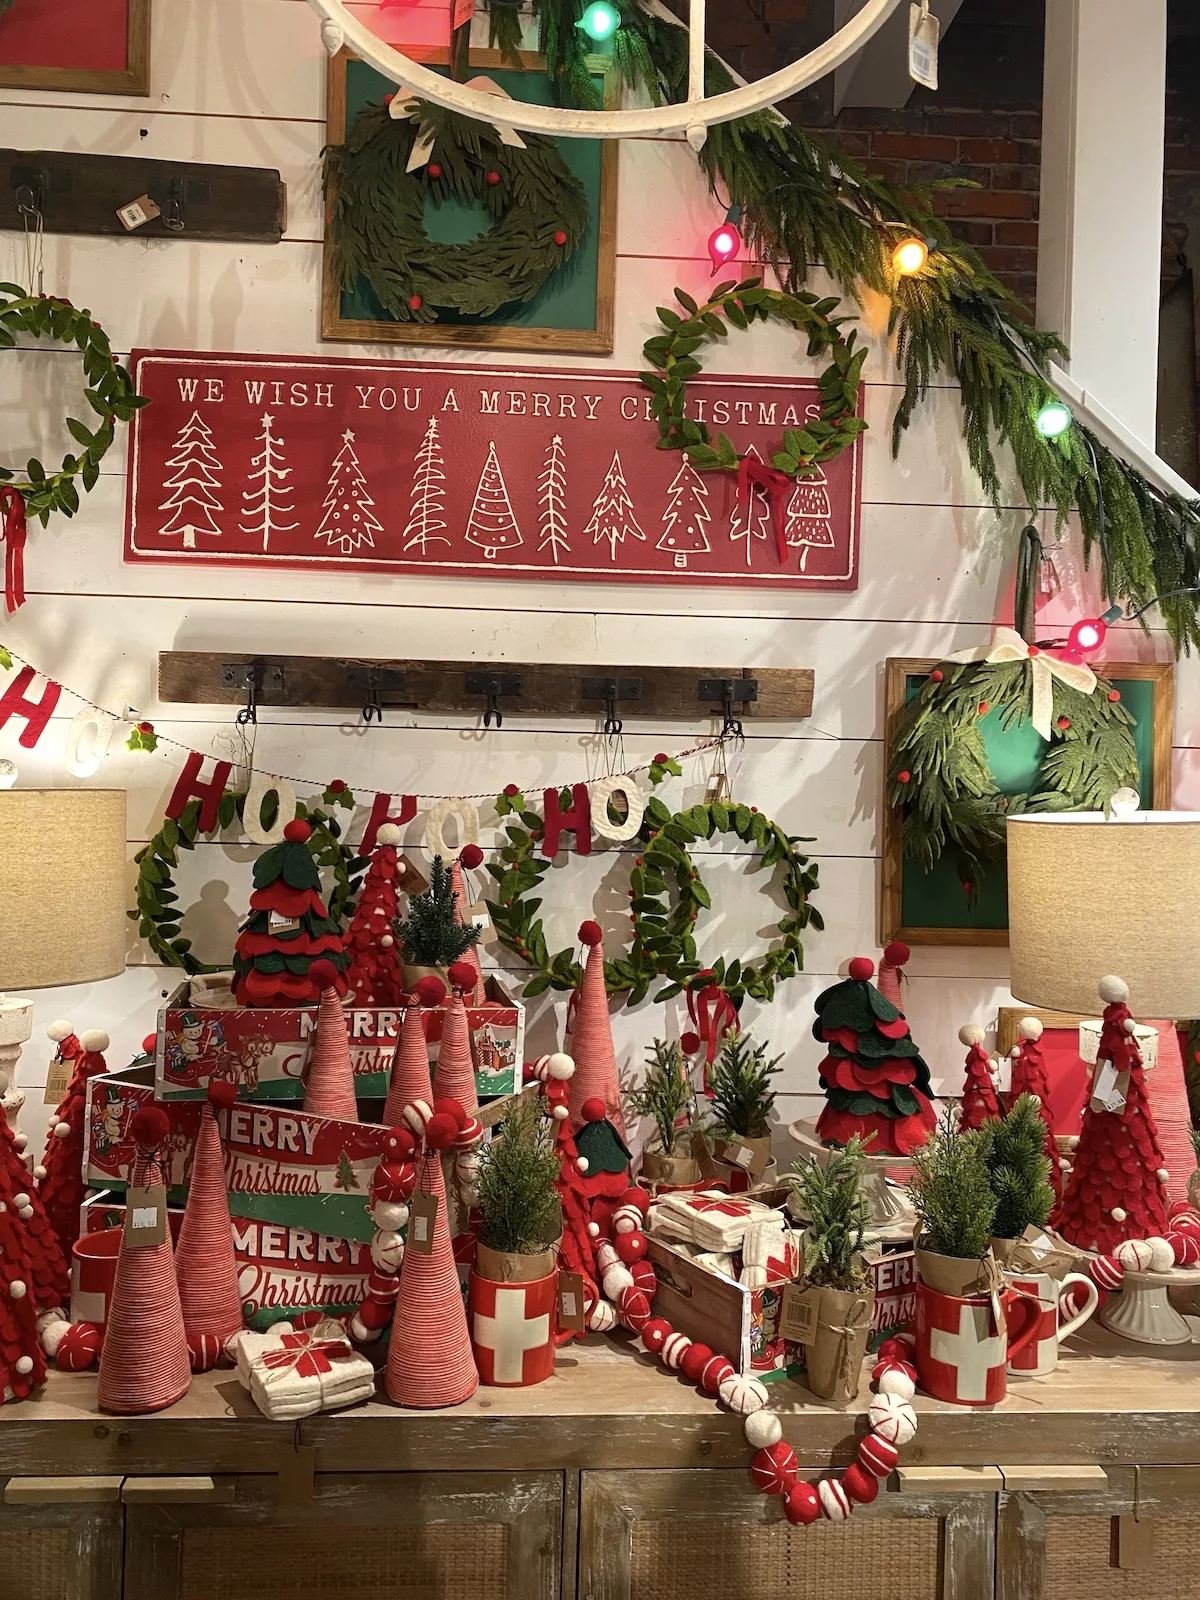 Display of Christmas decorations at Simple Treasures in Pella, Iowa